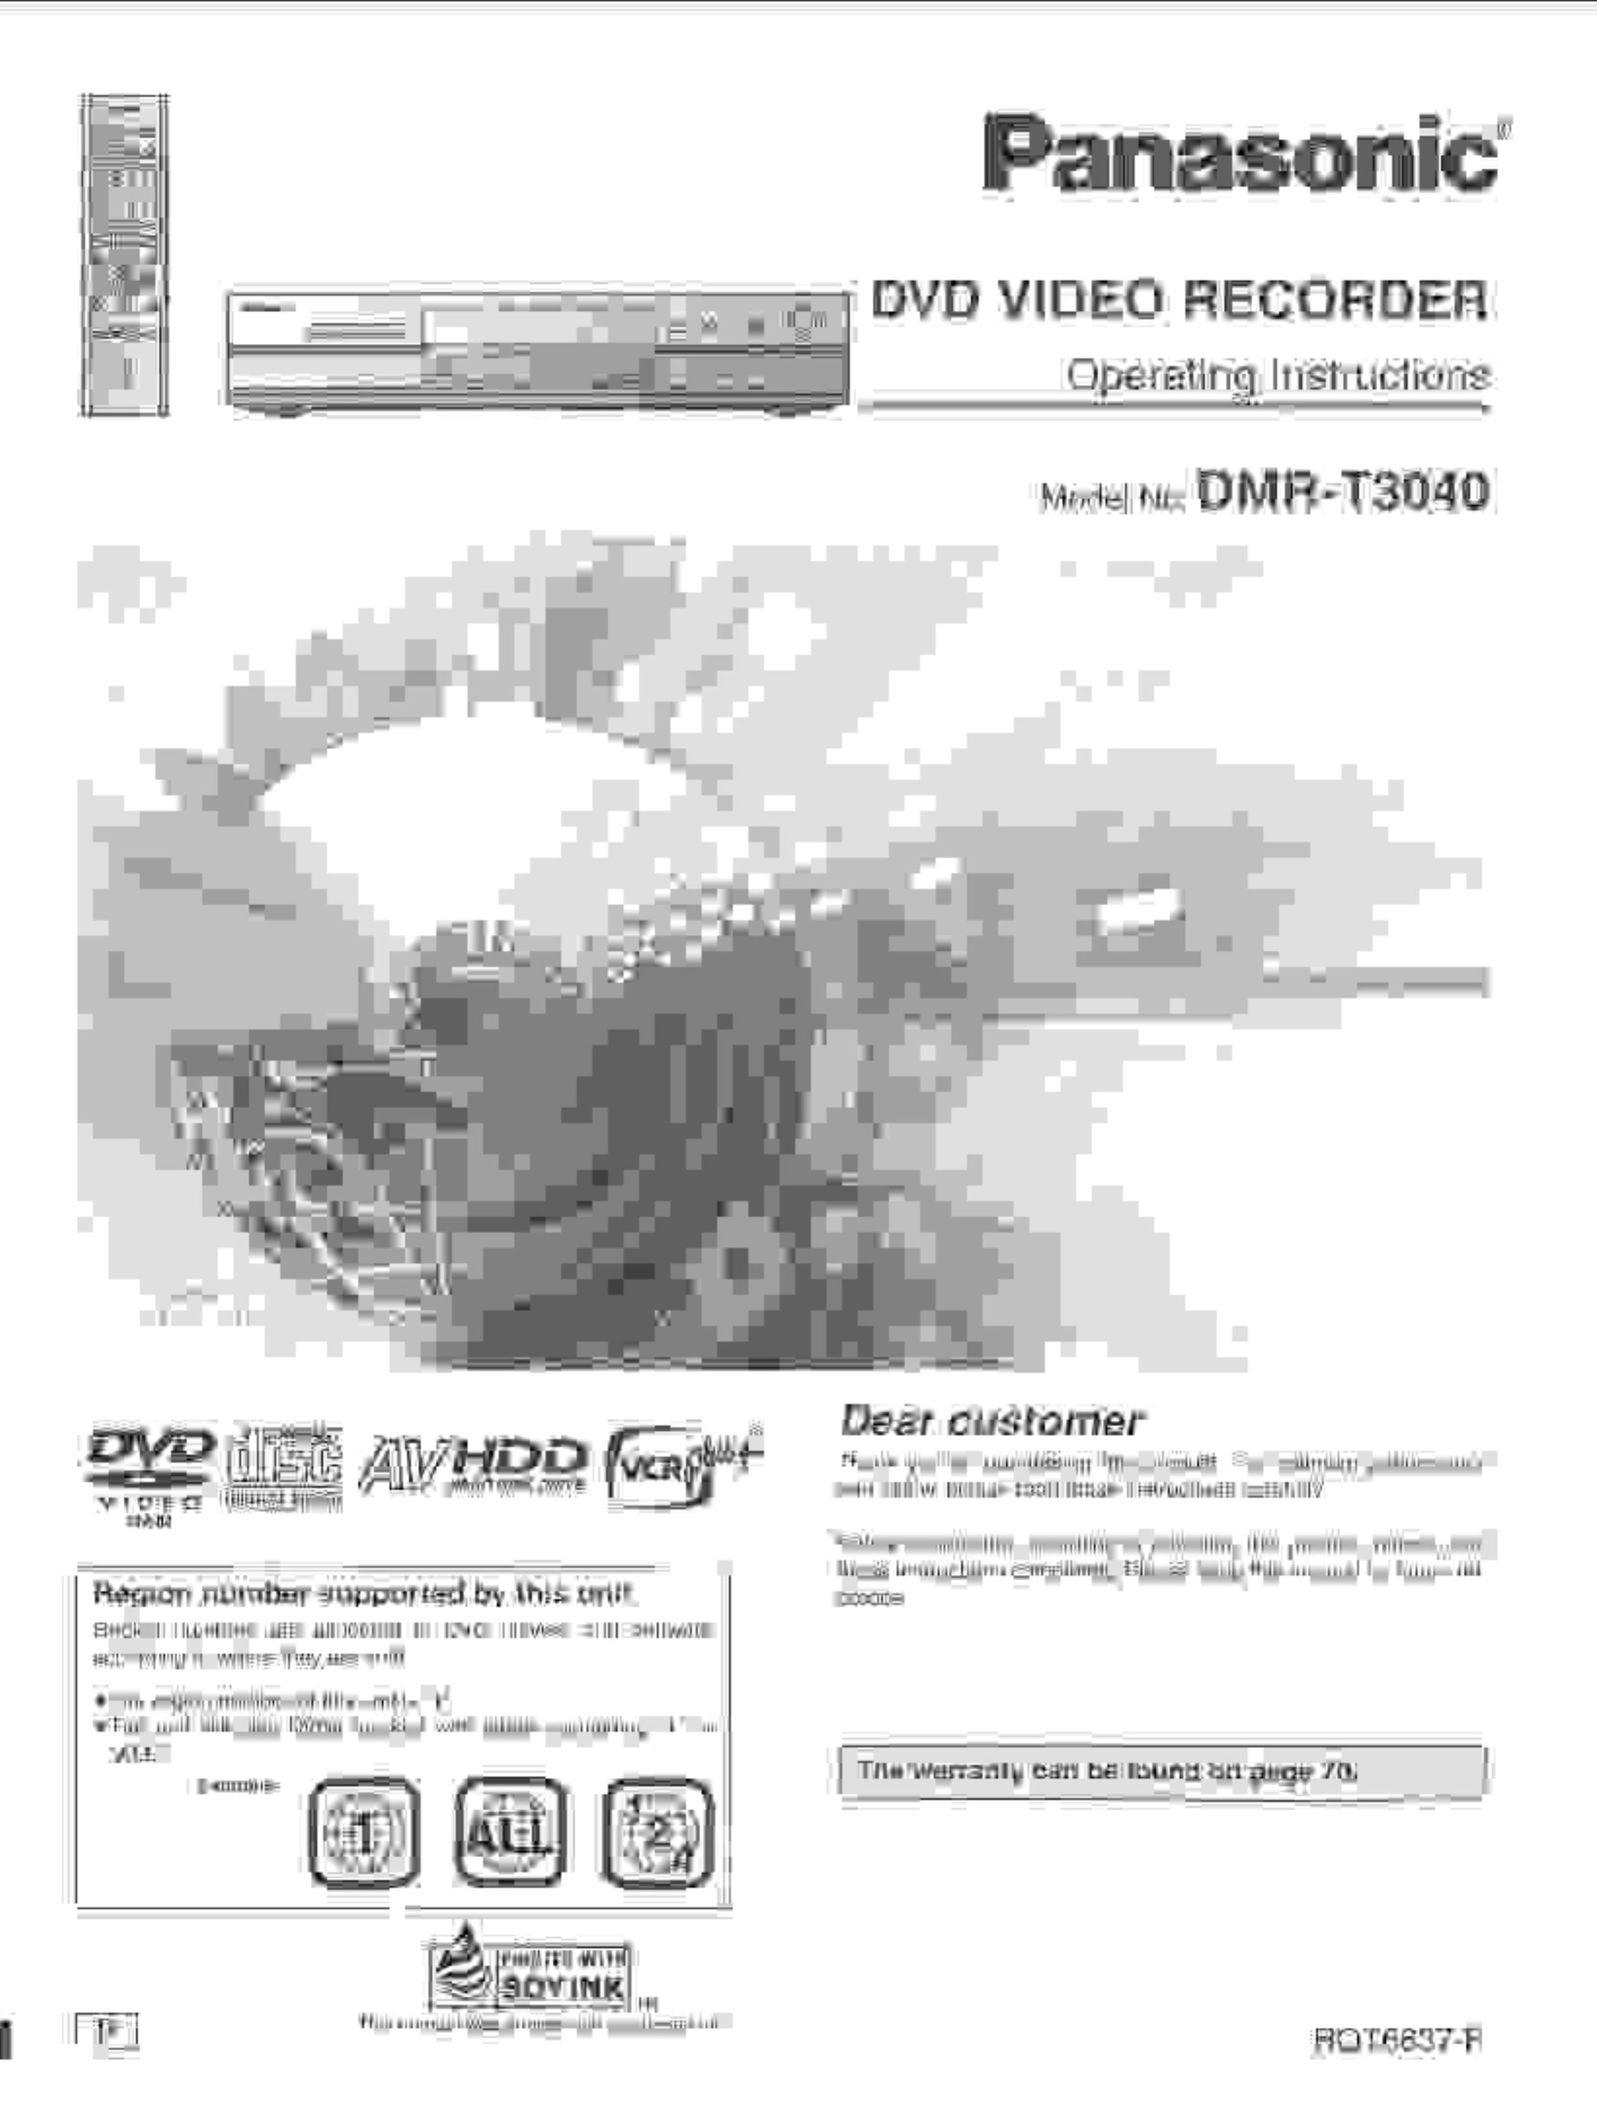 Panasonic DMR-T3040 DVR User Manual